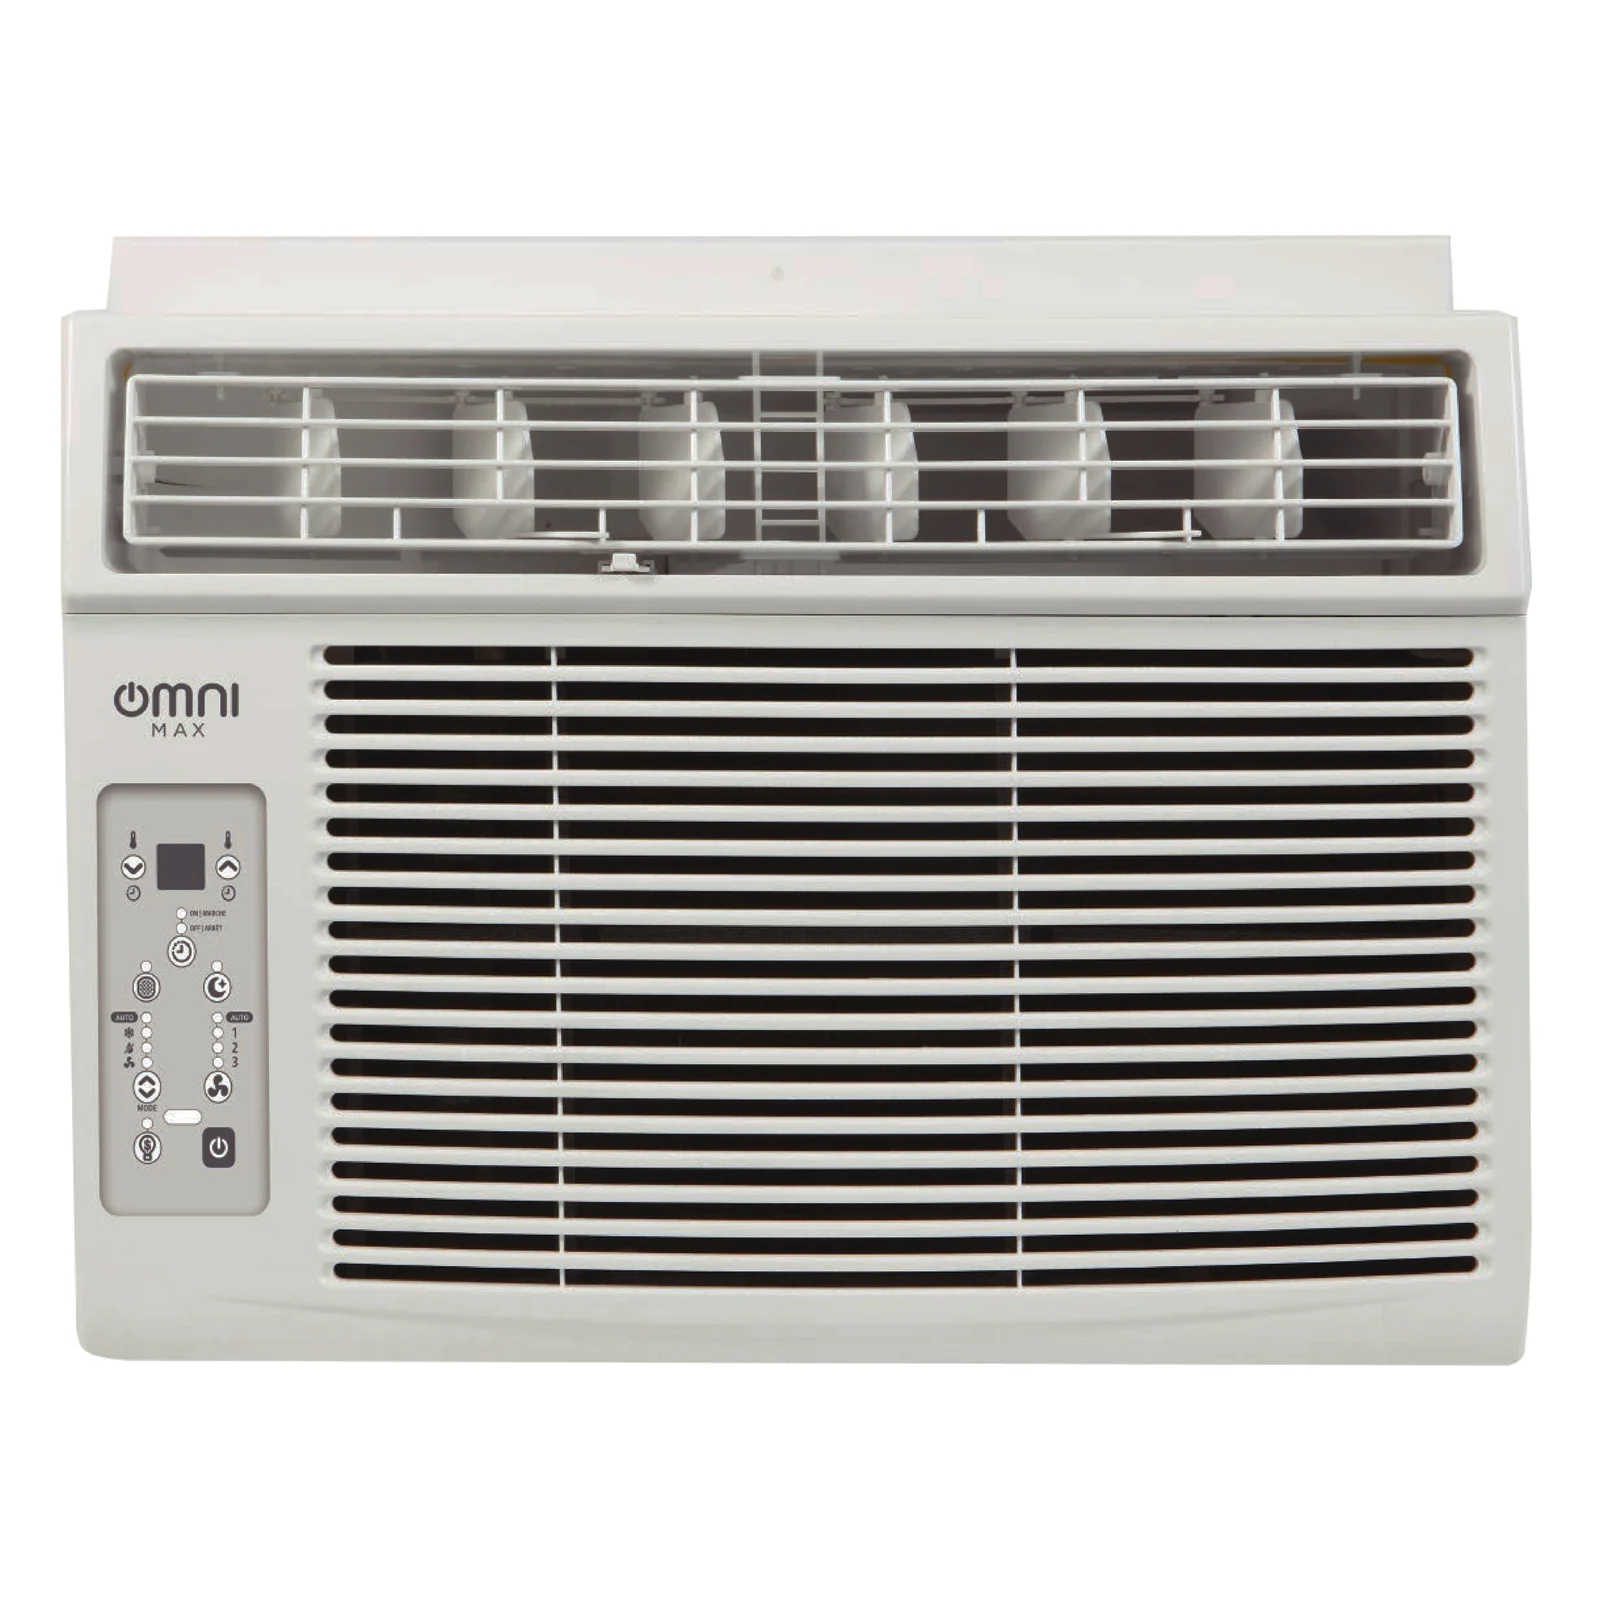 A window air conditioner